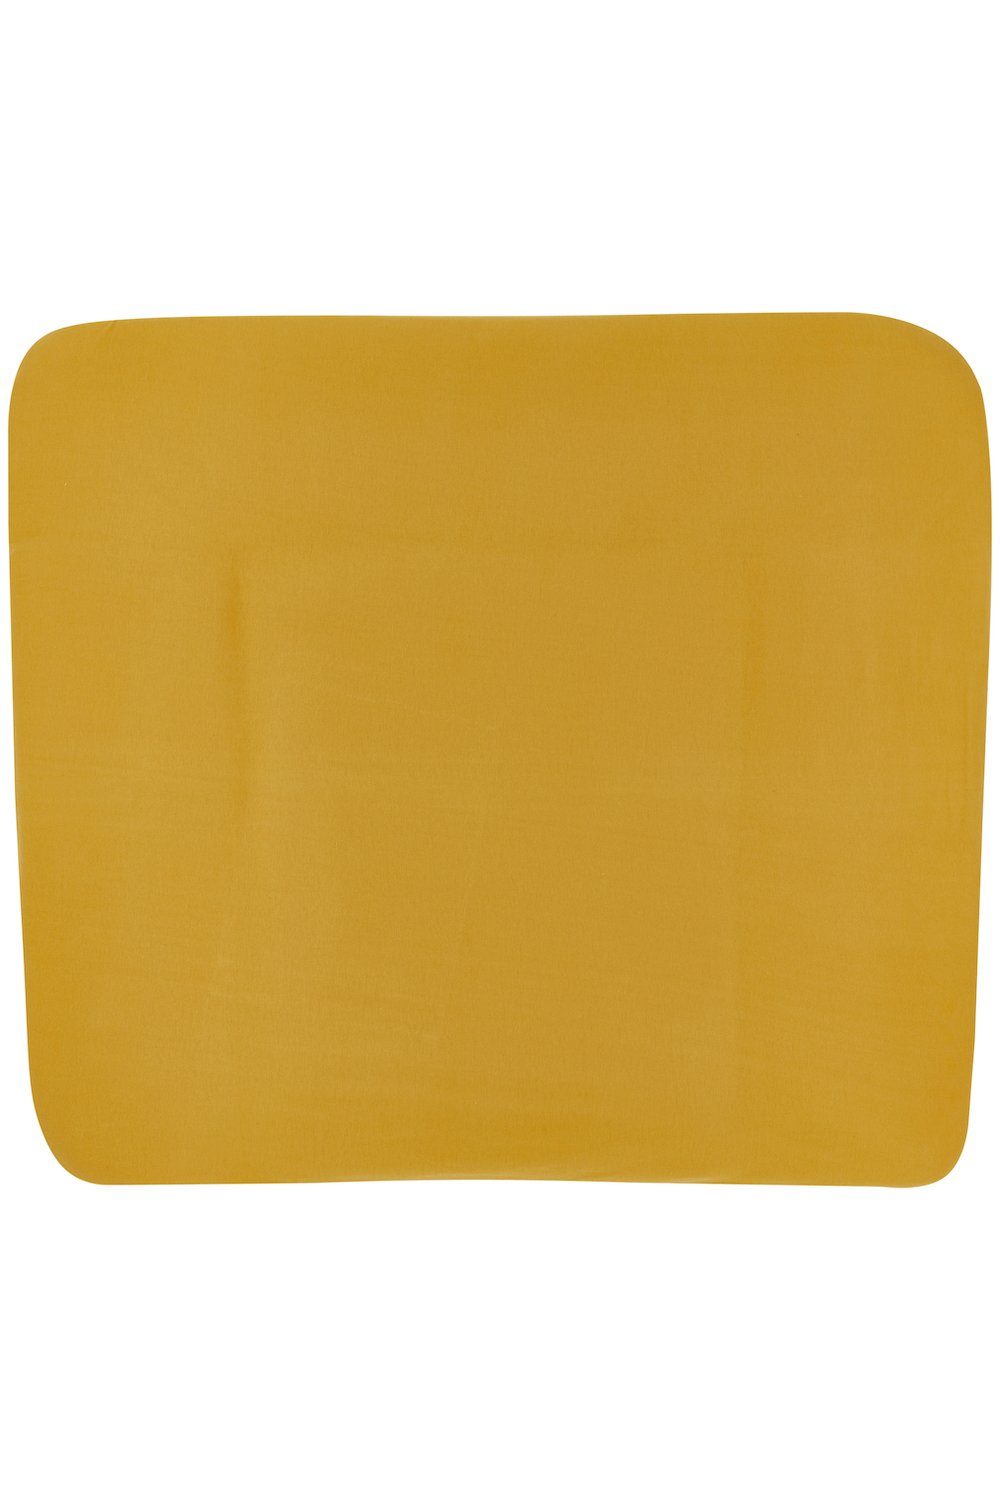 Gold Meyco Wickelauflagenbezug Honey (1-tlg), 85x75cm Baby Uni